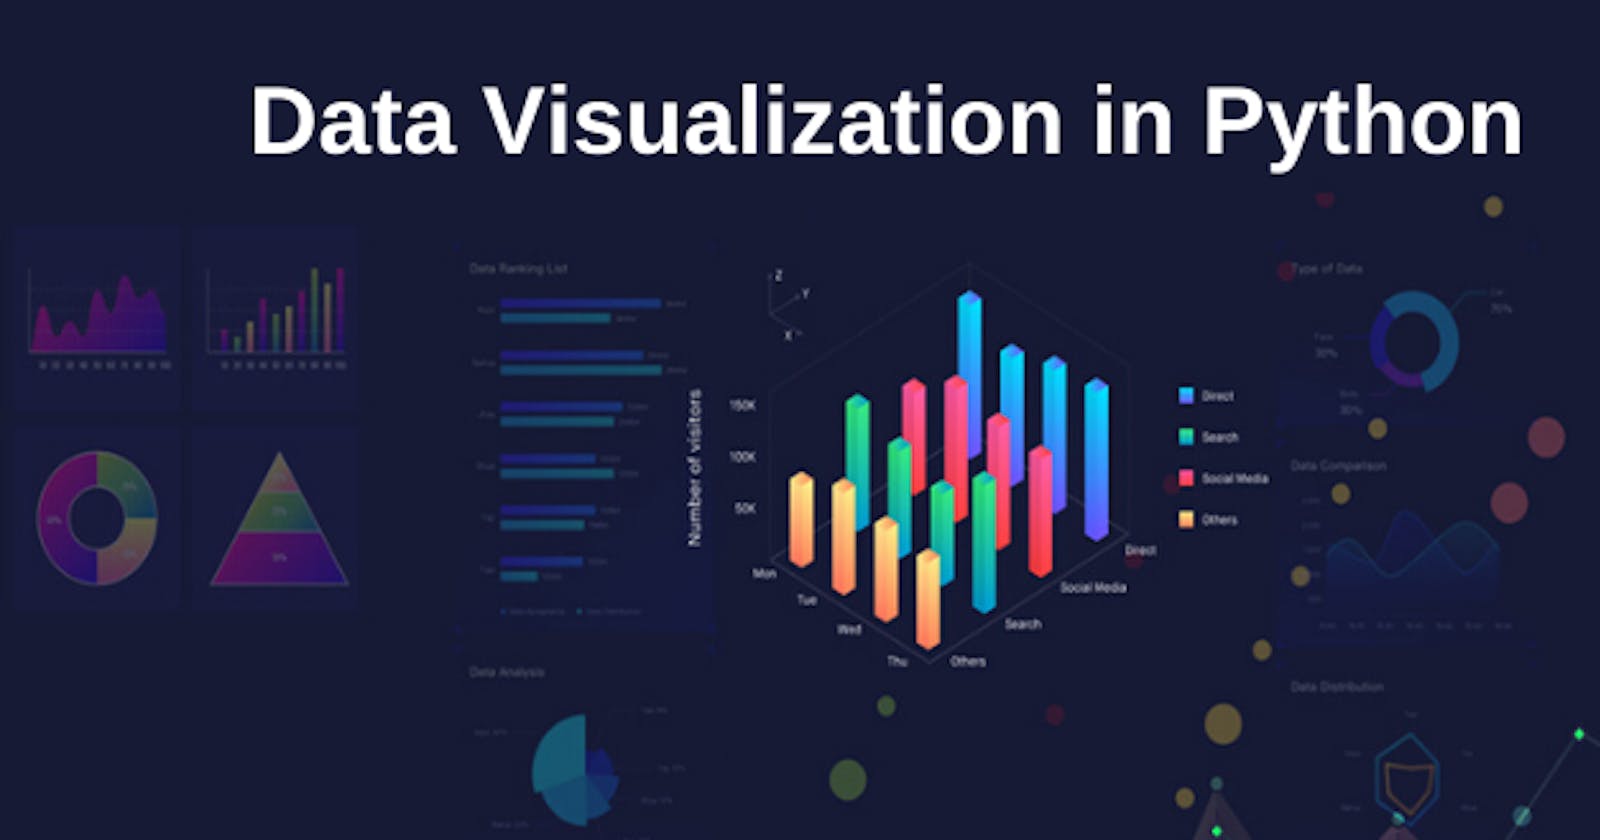 Data Visualization with Matplotlib and Seaborn